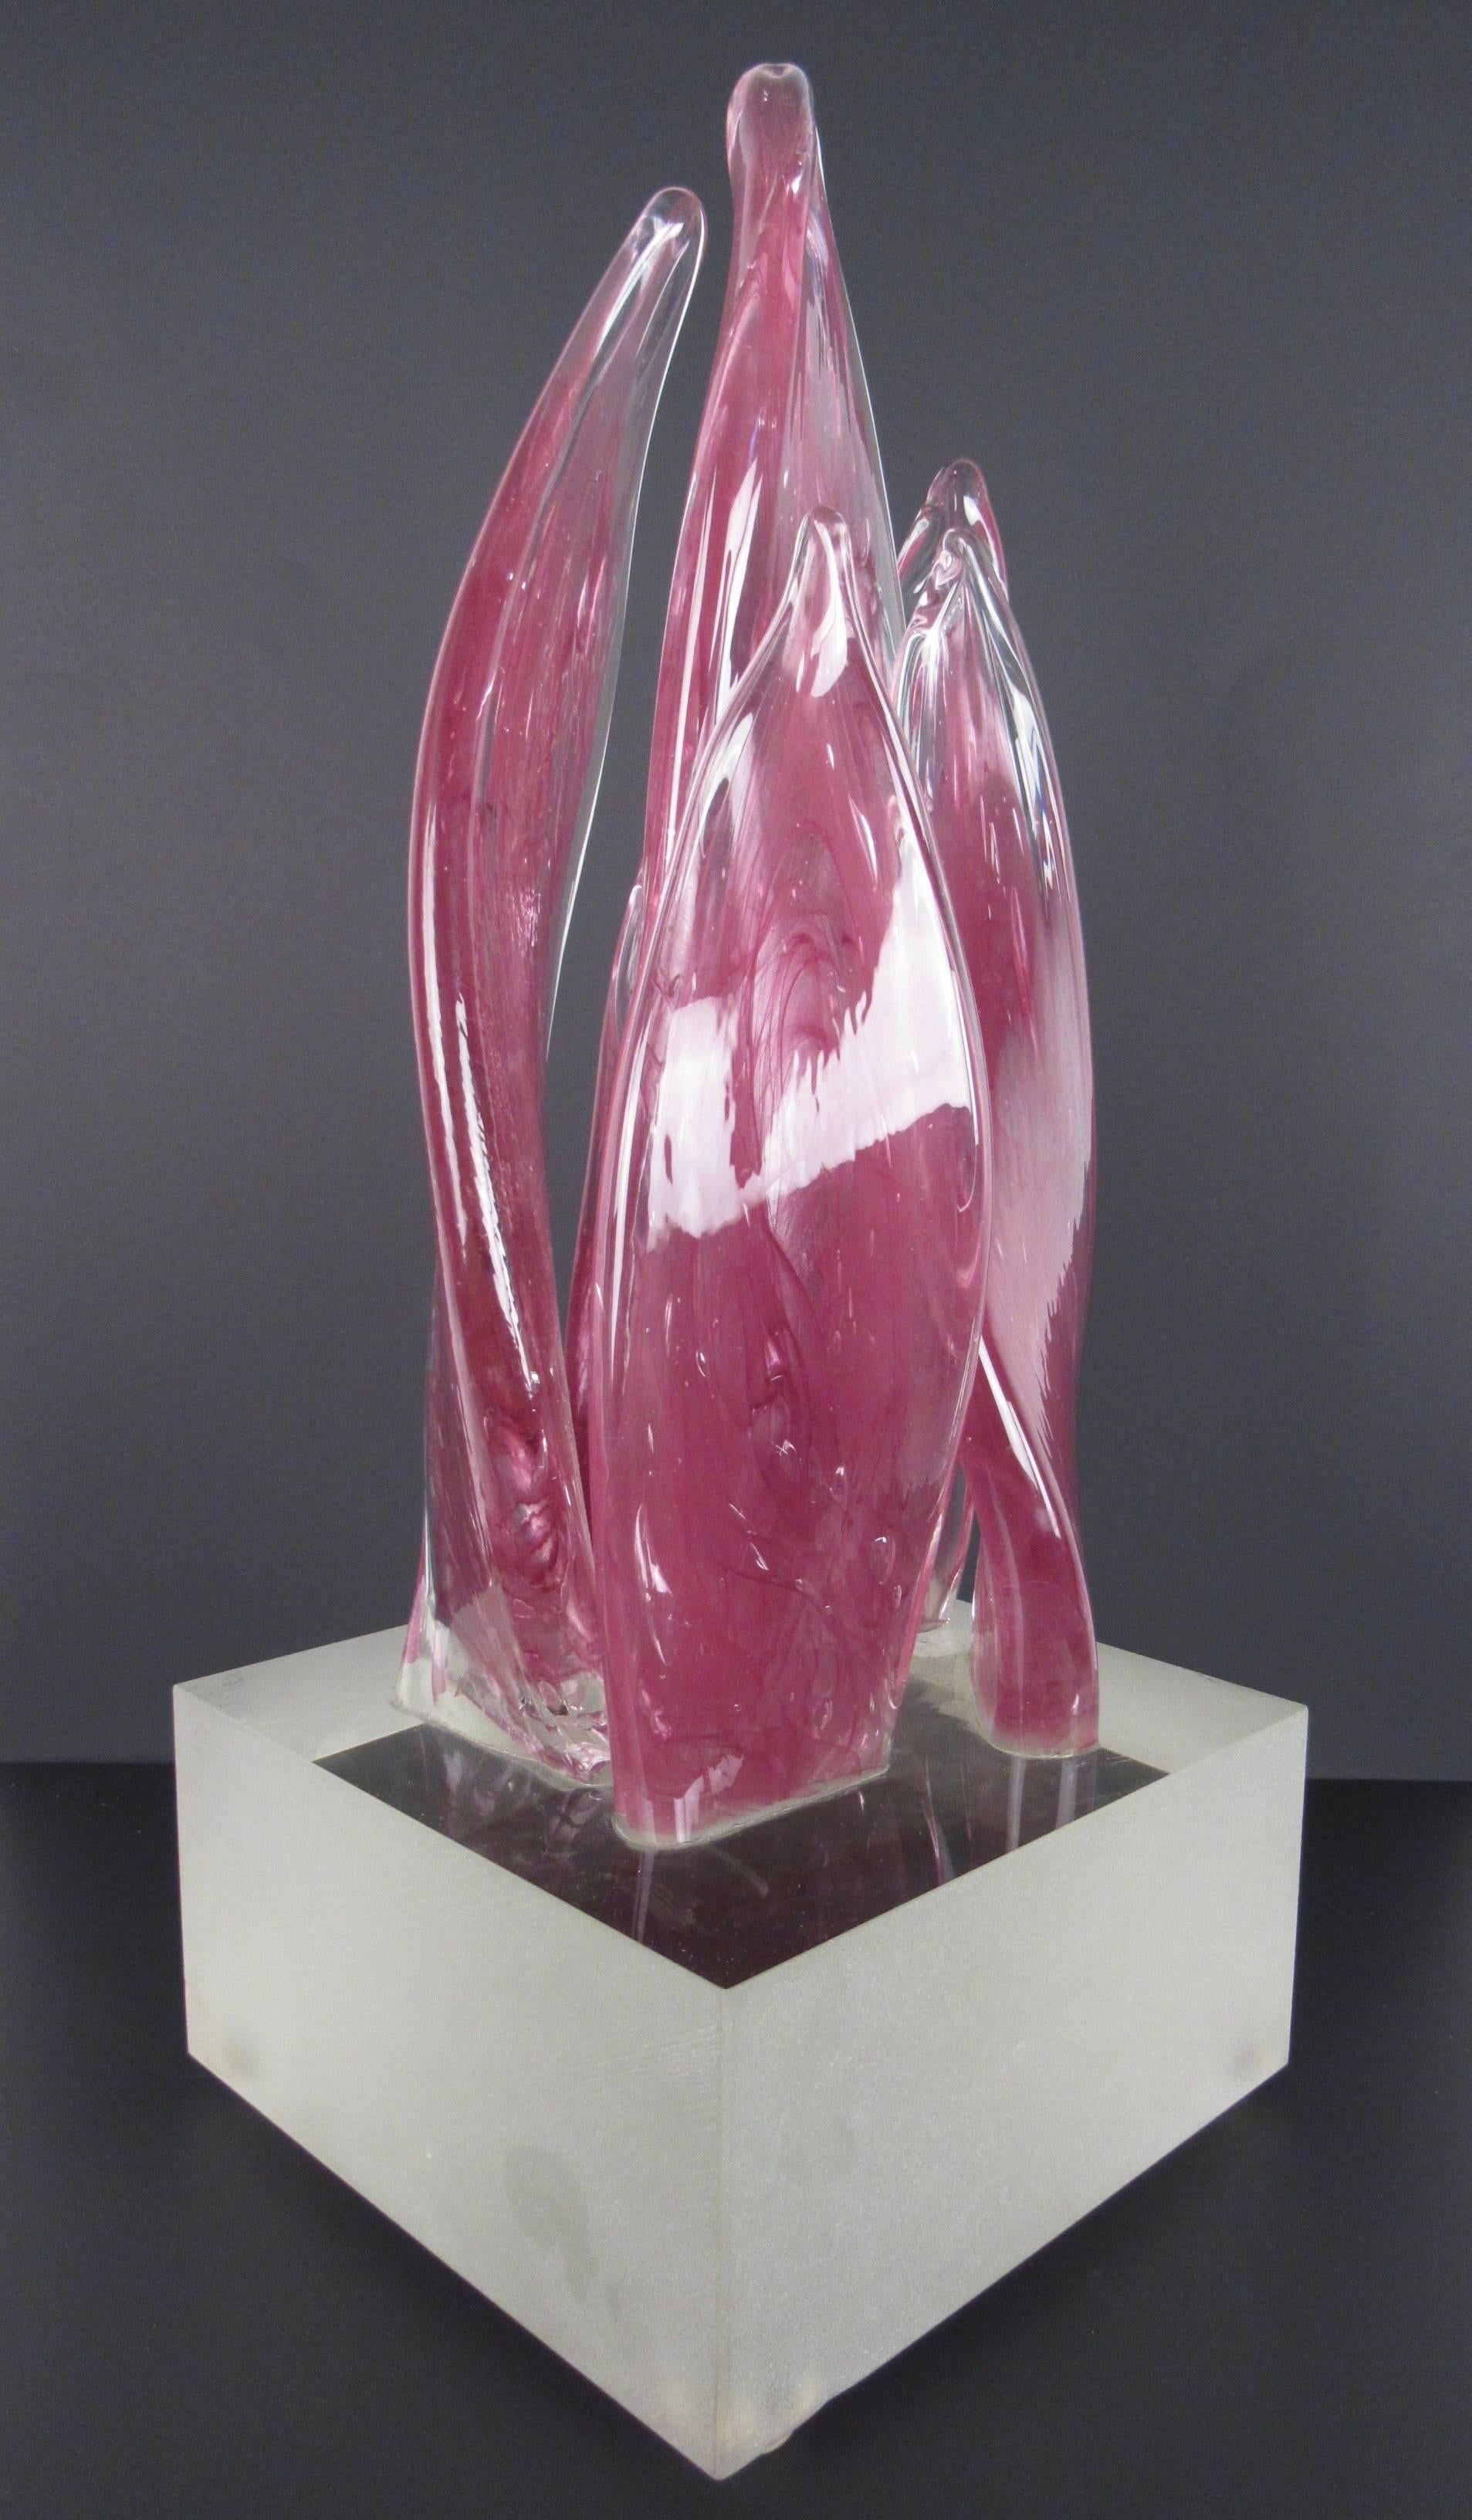 abstract glass sculpture